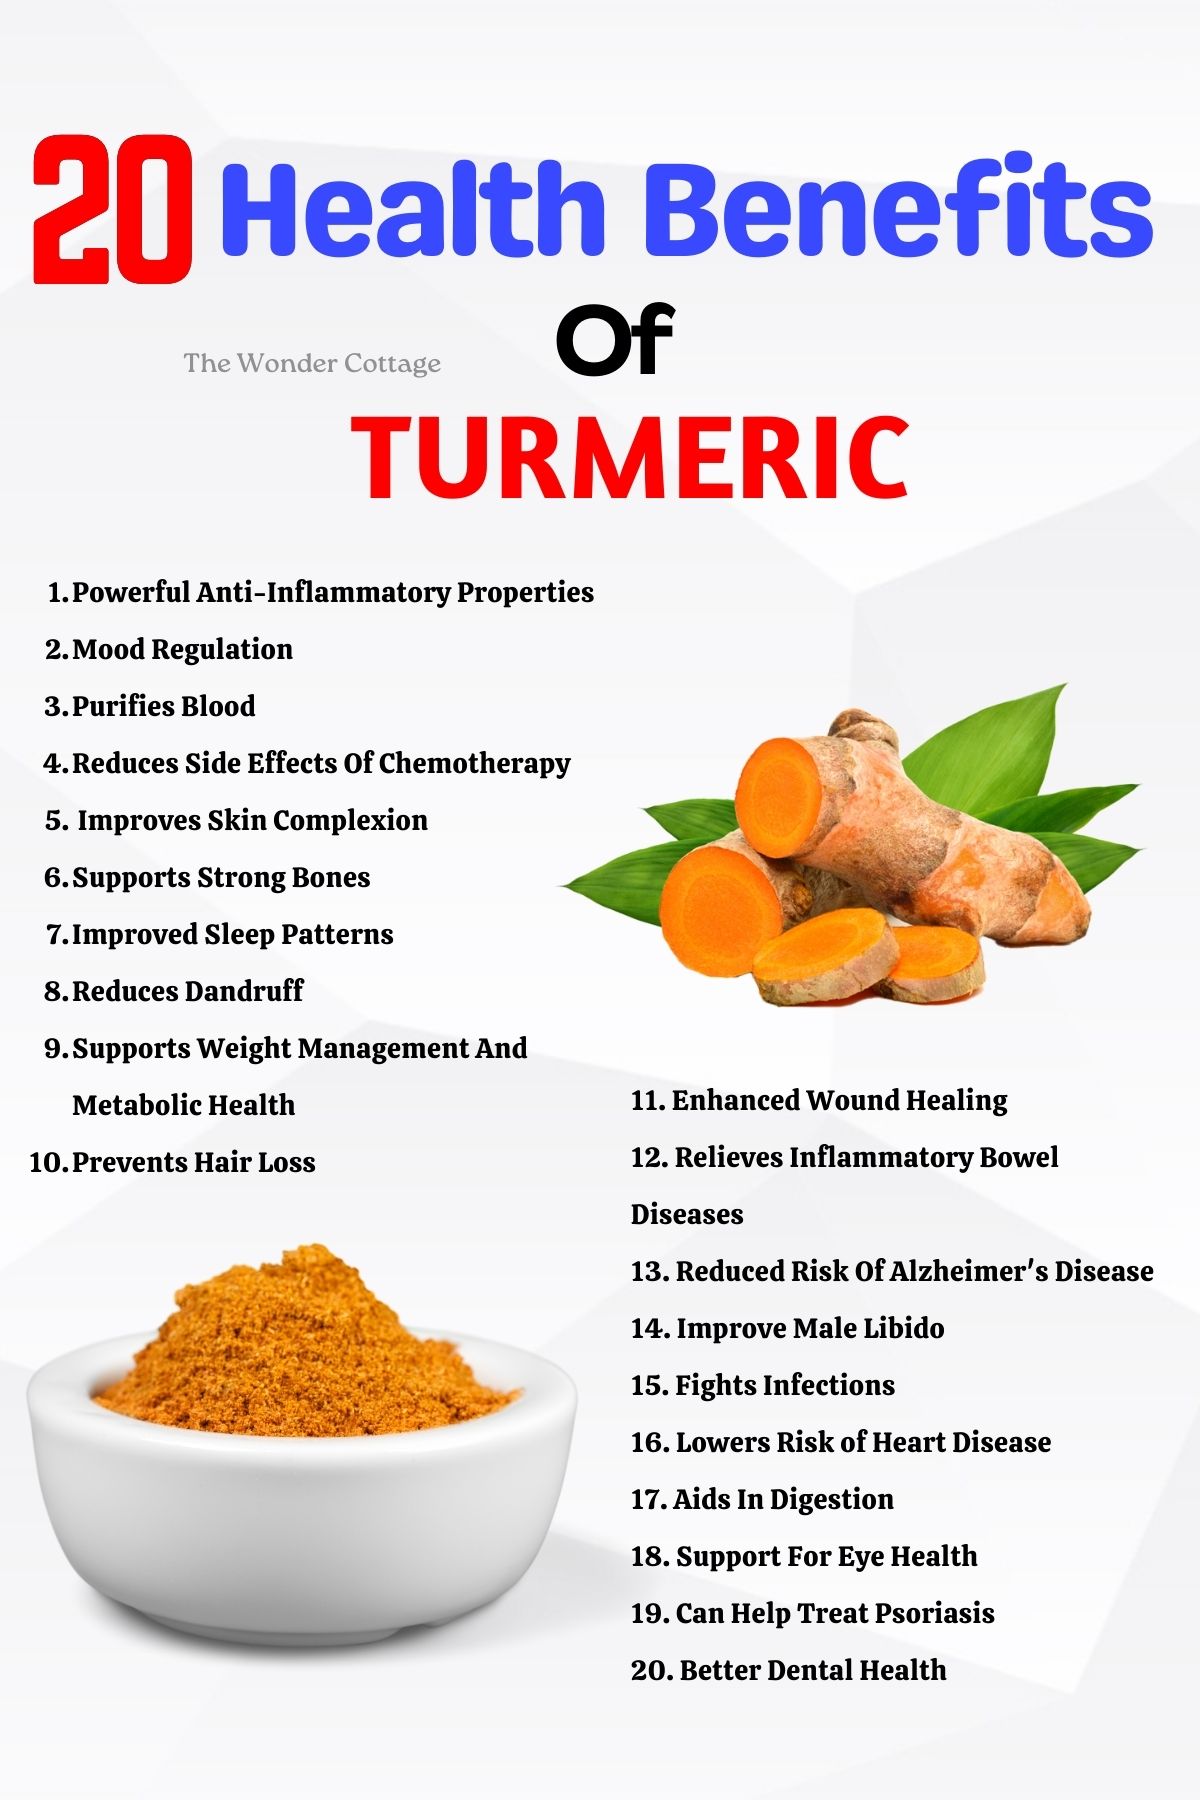 Top 20 Health Benefits Of Turmeric